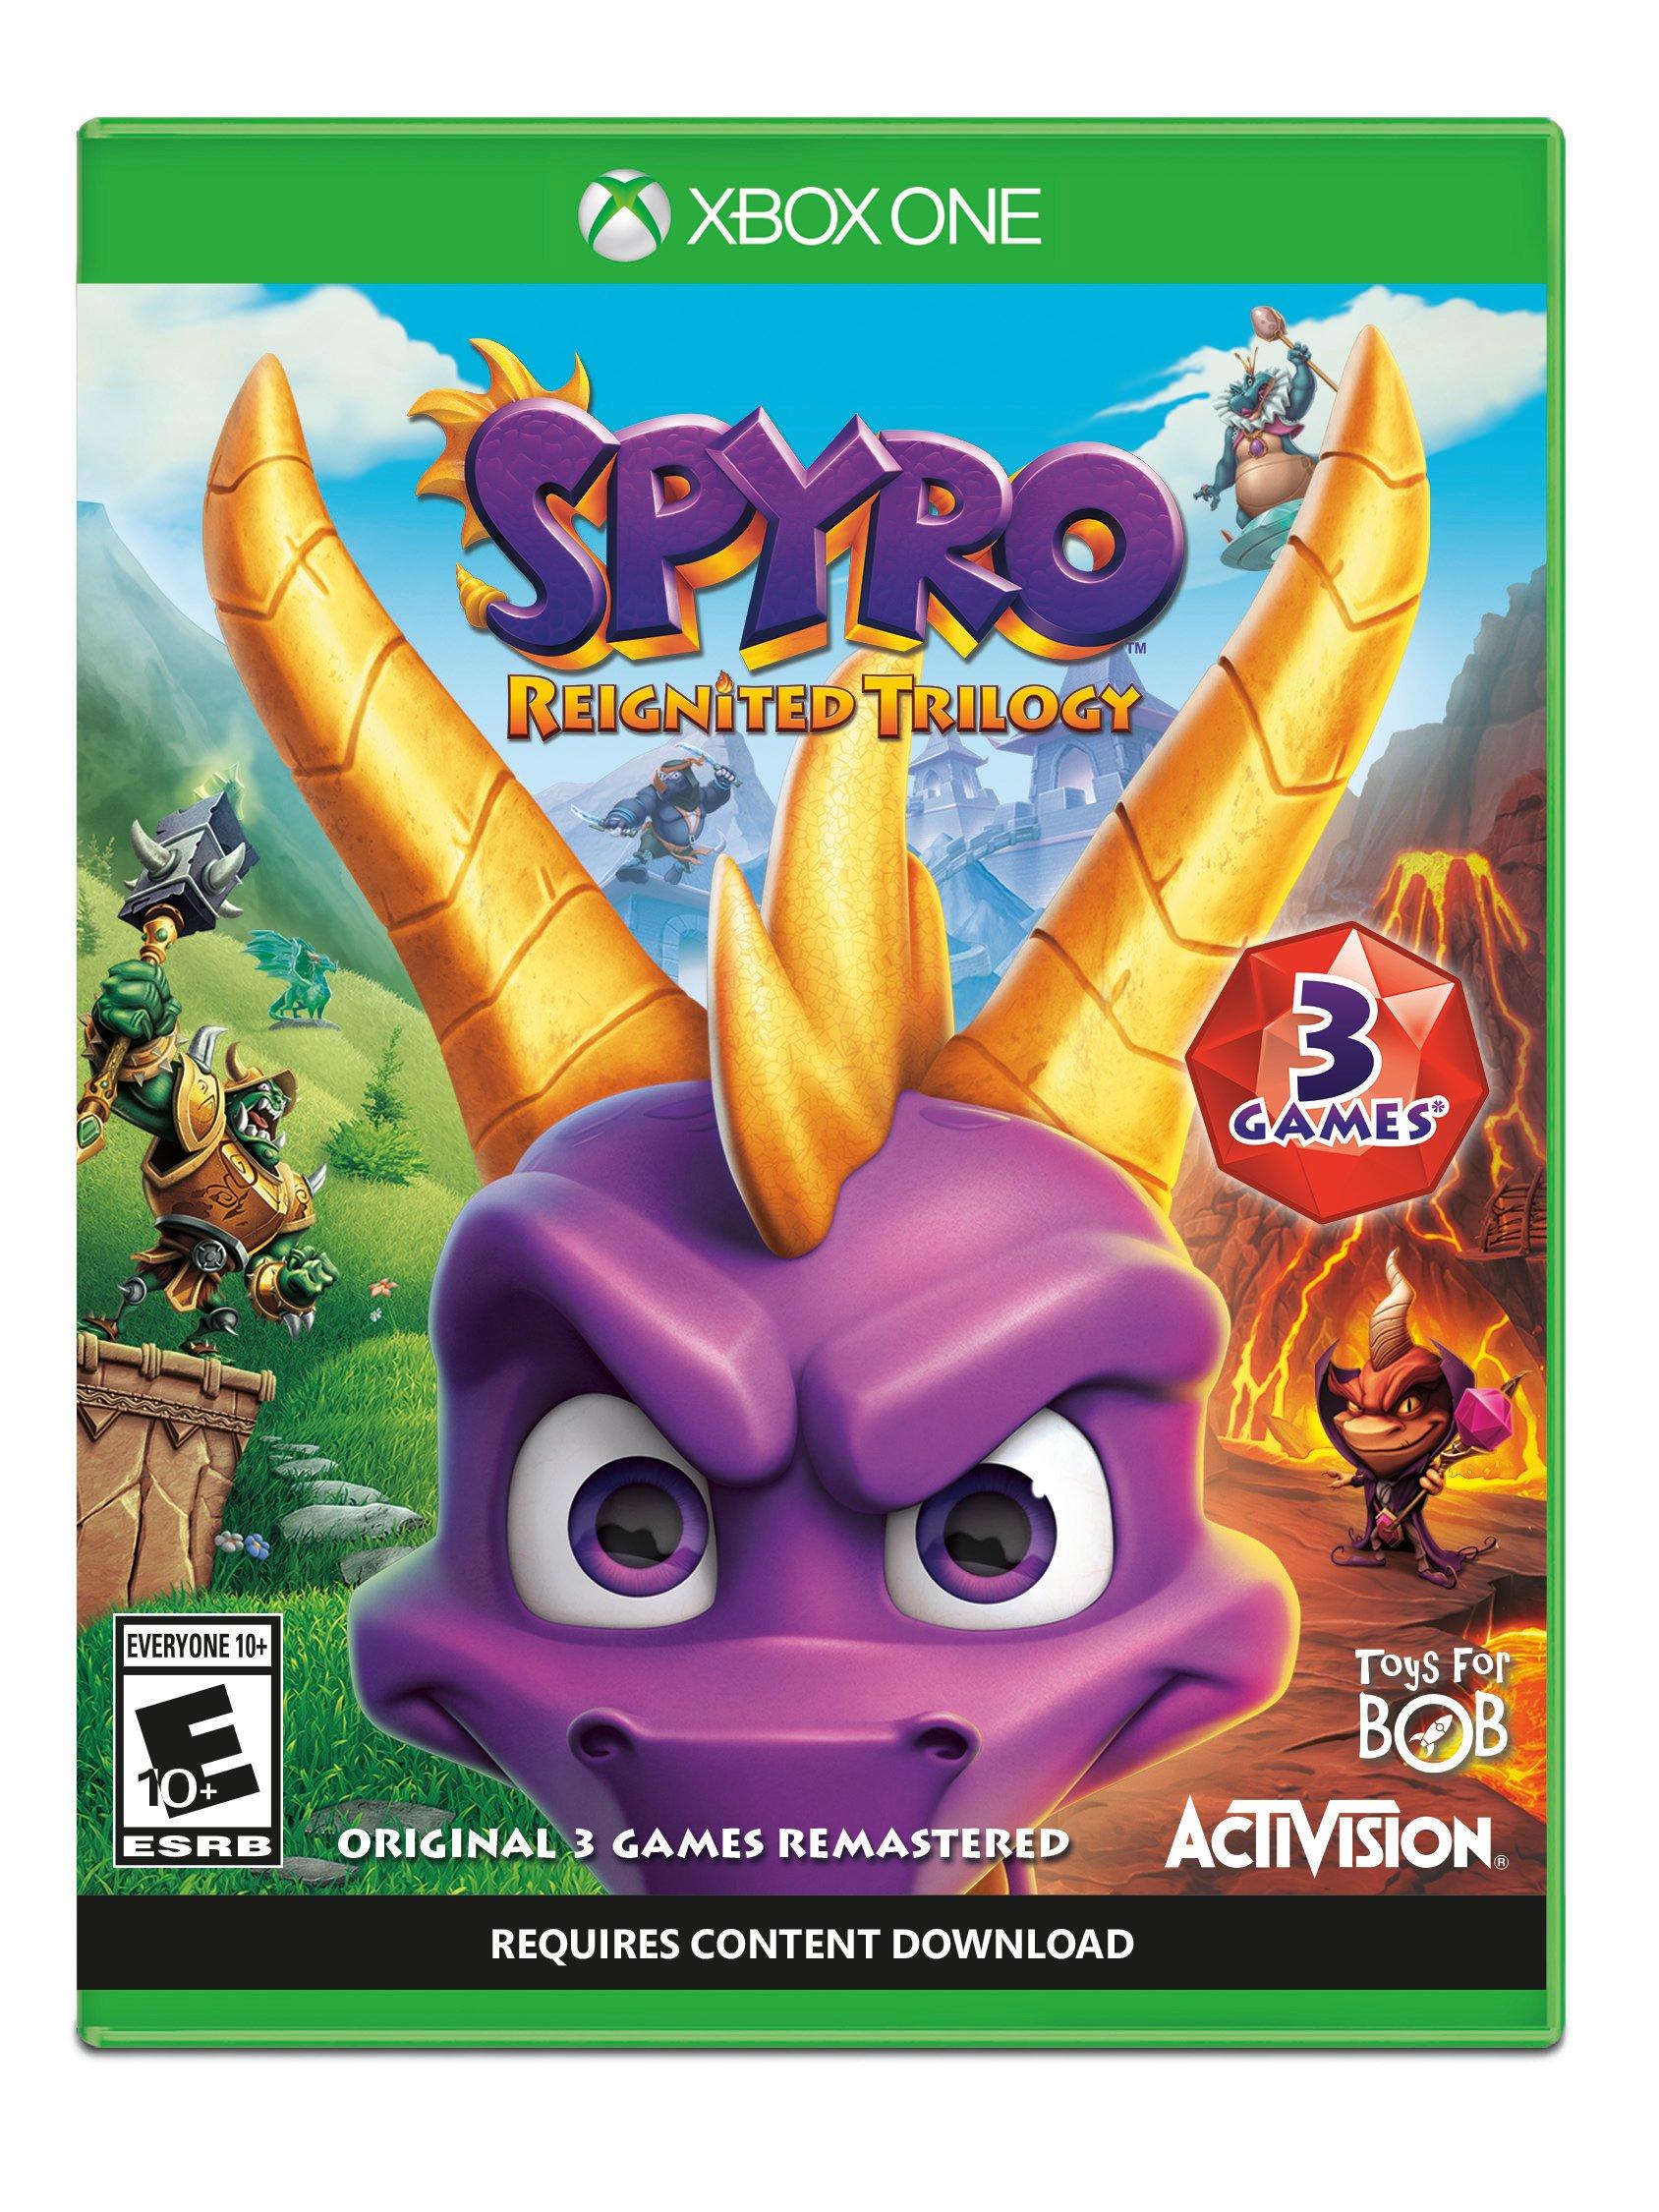 Xone Spyro Trilogy Reignited Activision 88242it 5030917242328